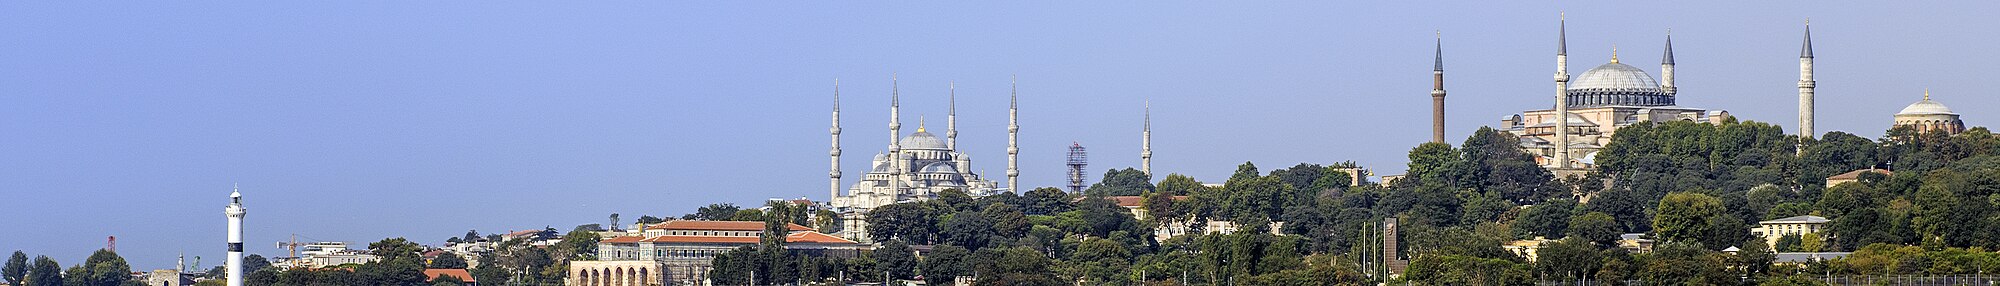 Istanbul Banner.jpg